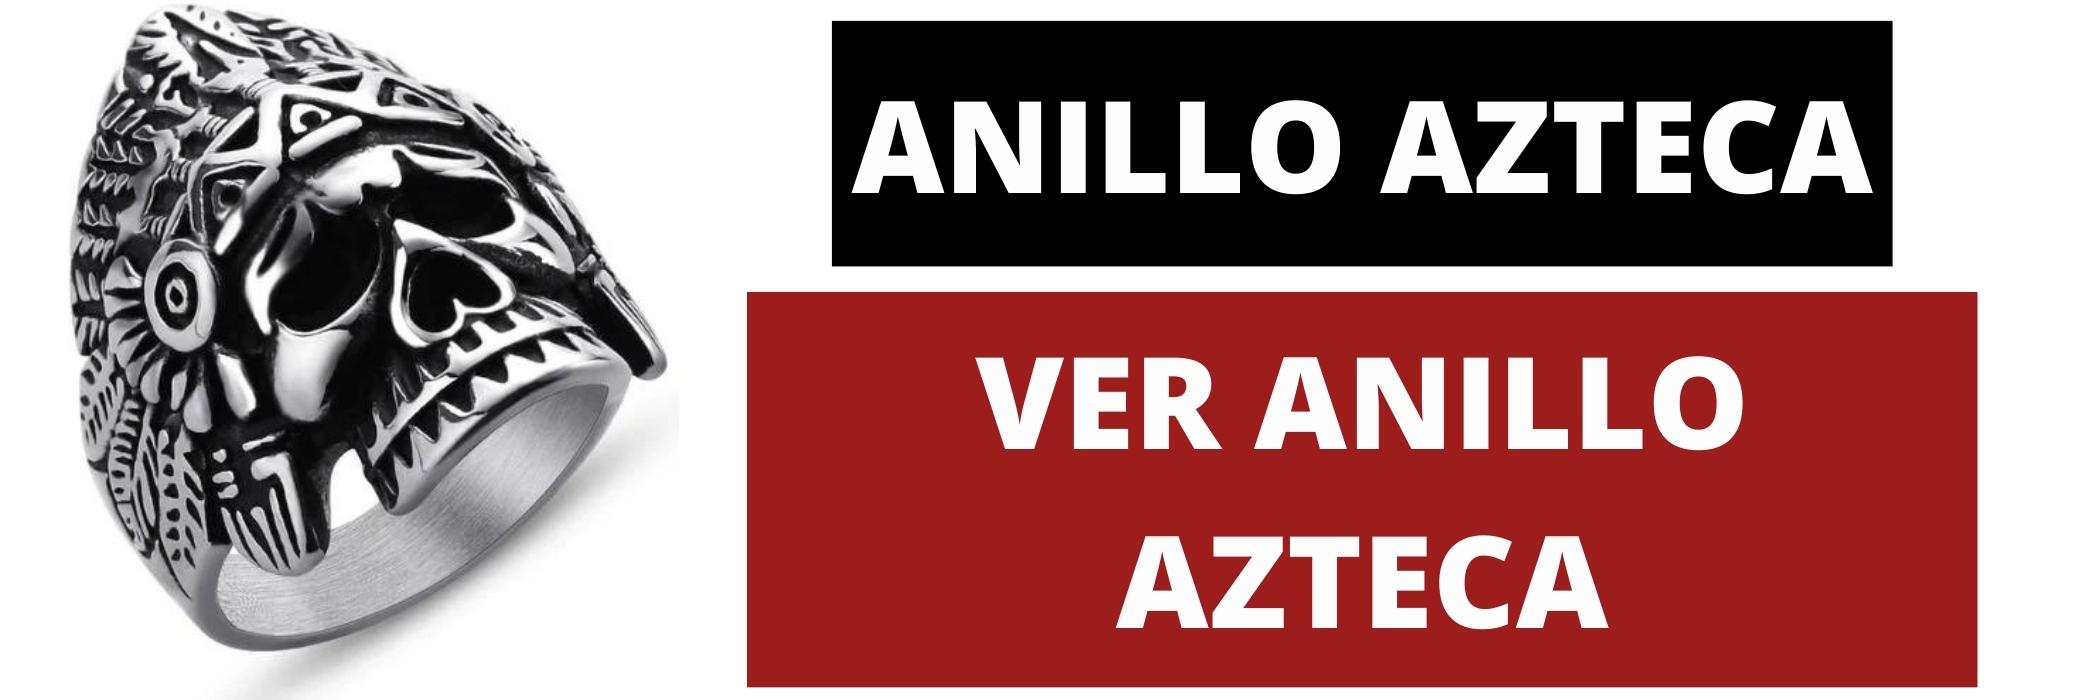 Anillo Guerrero Azteca